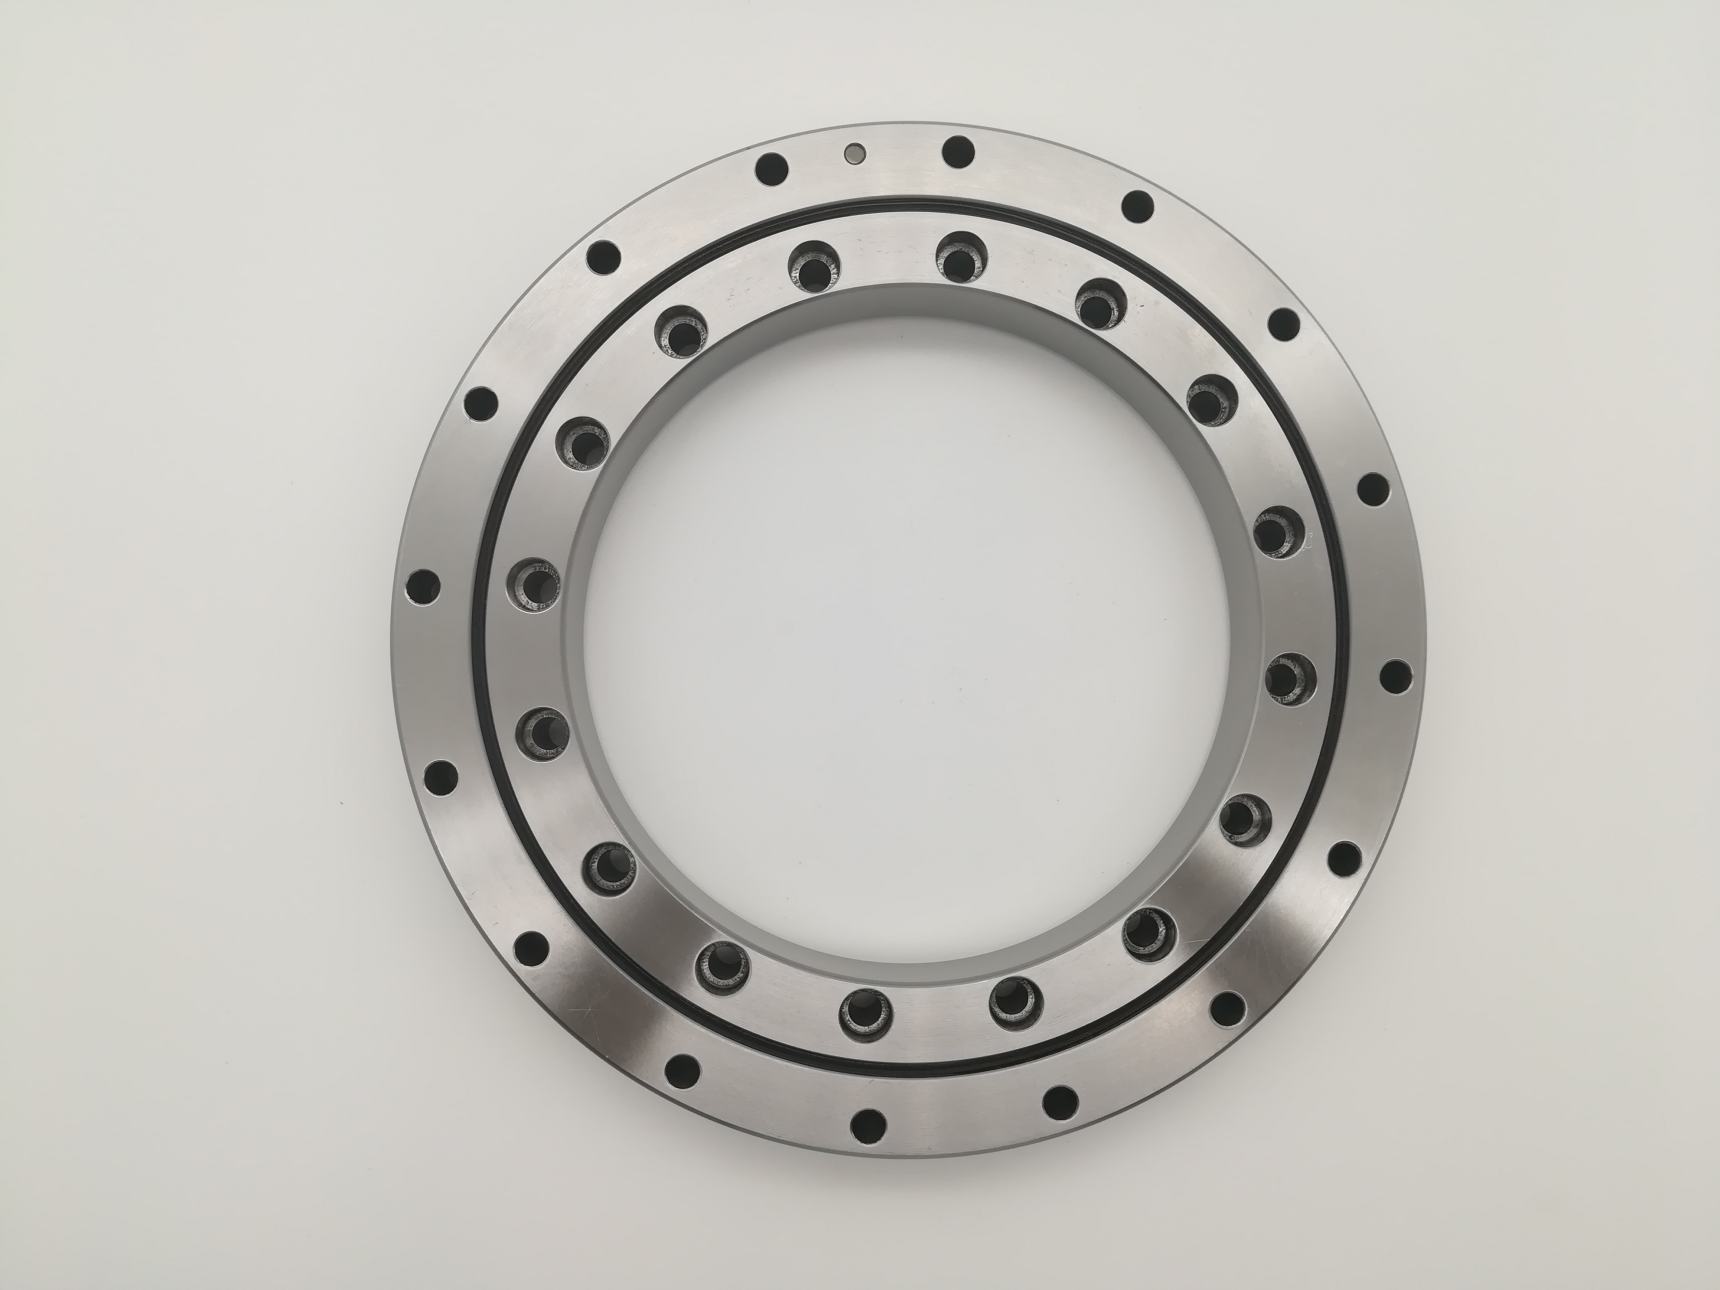 XSU080168 crossed roller bearing|thin section slewing bearing 130*205*25.4mm